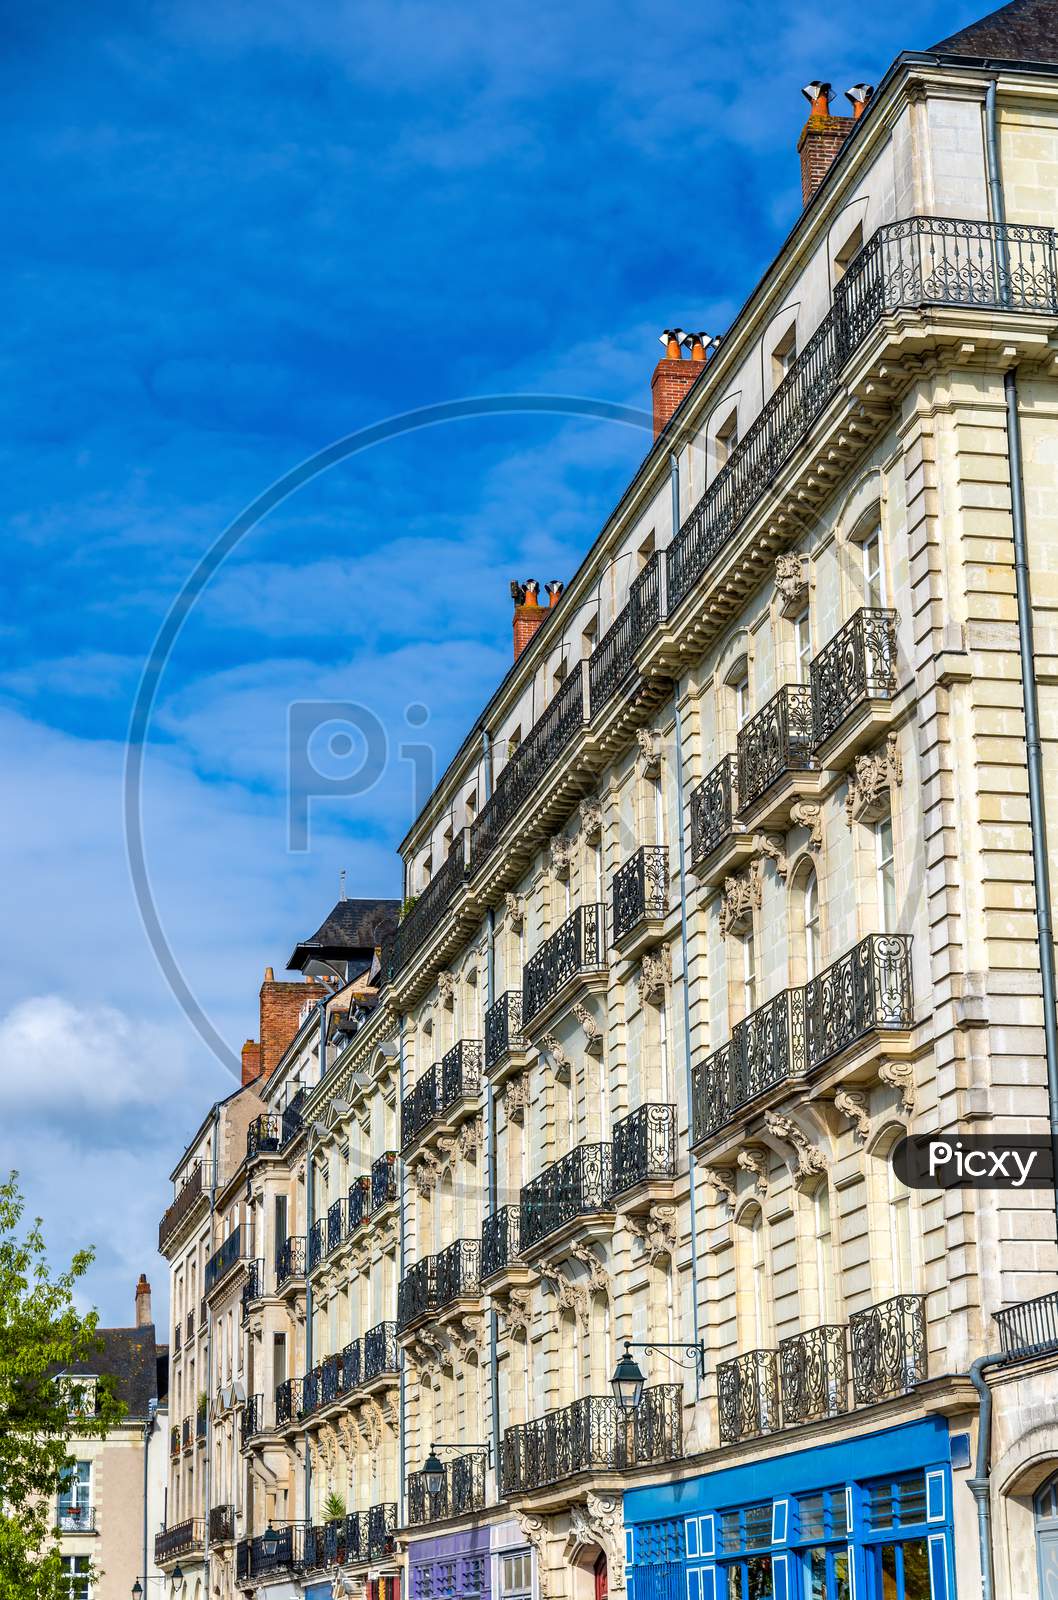 Historic Buildings In Nantes, France